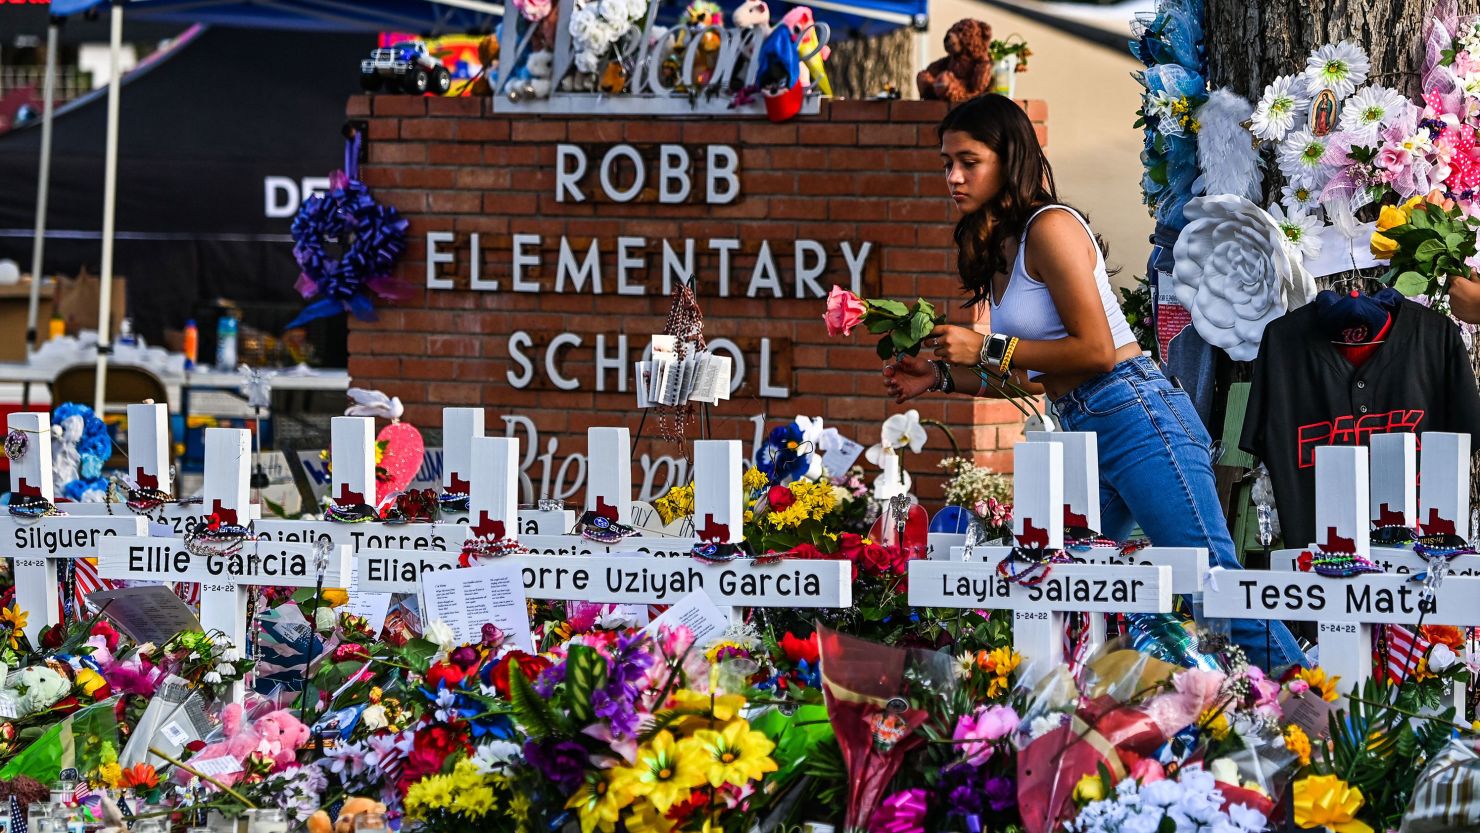 The makeshift memorial at Robb Elementary School in Uvalde, Texas.